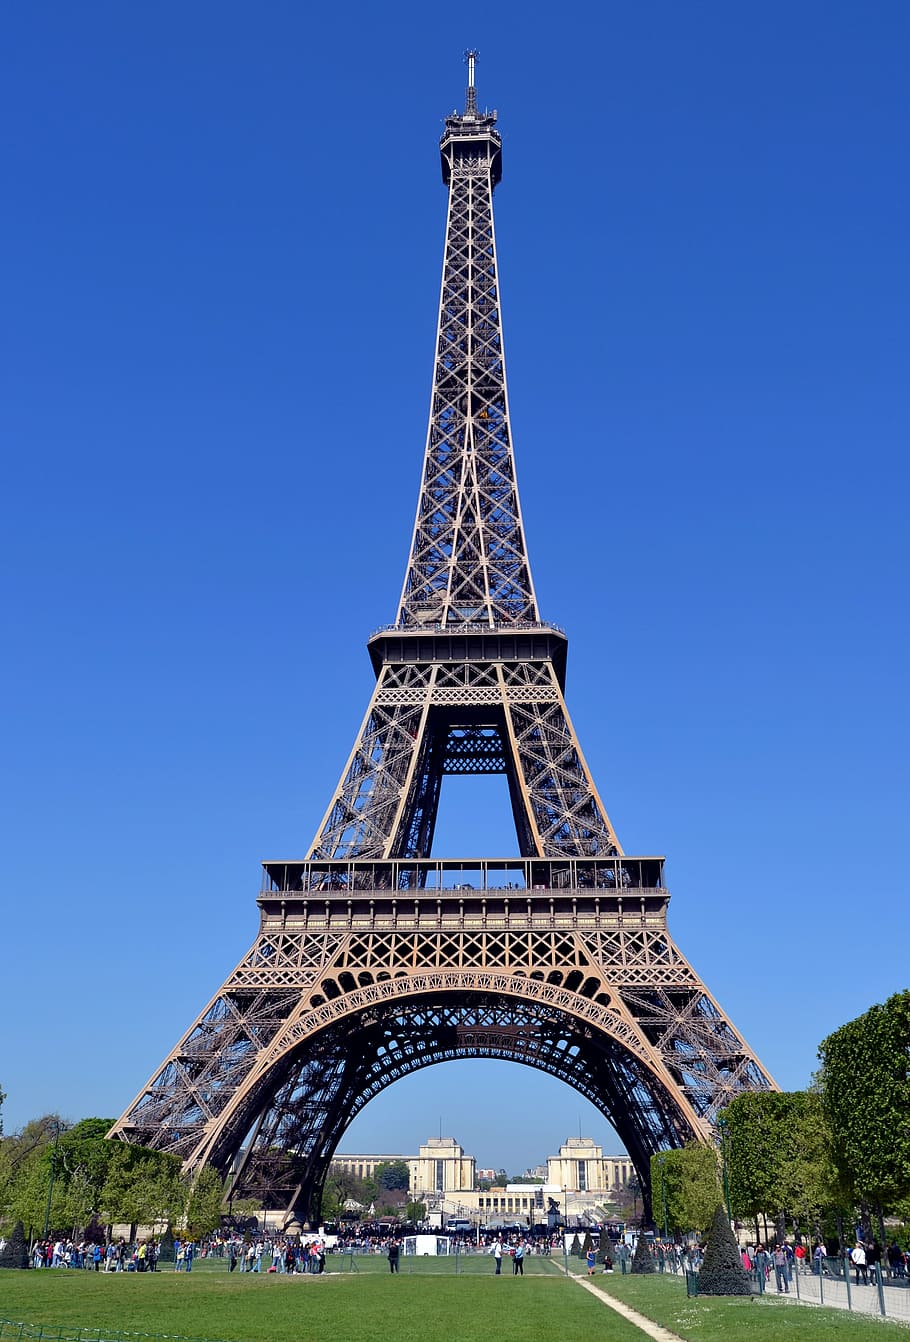 1080p Images: Beautiful Eiffel Tower Wallpaper Hd